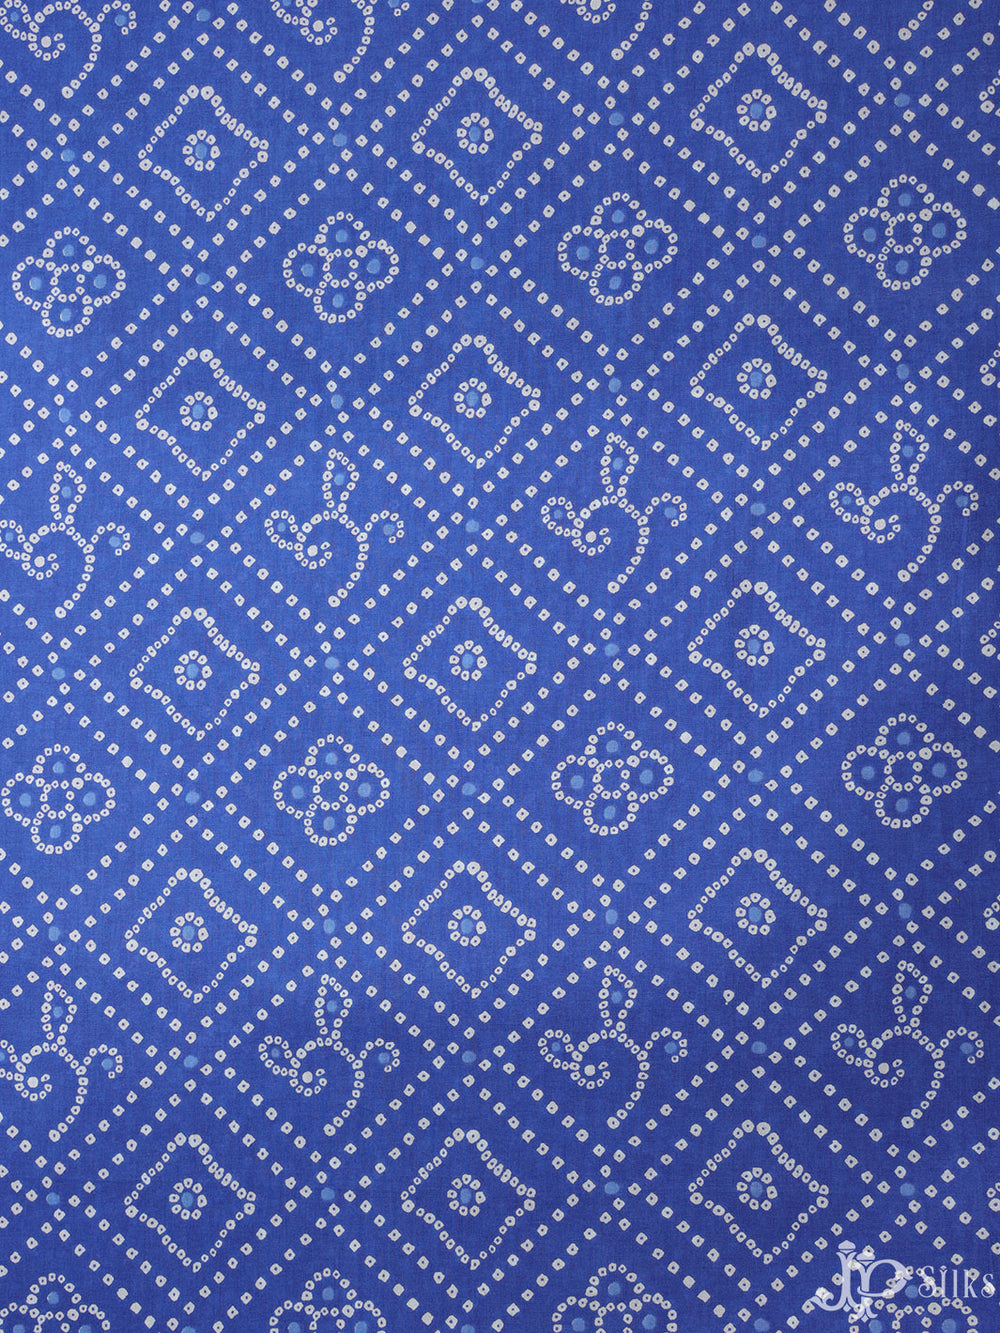 Dark cobalt blue Cotton Fabric - A5947 - View 1